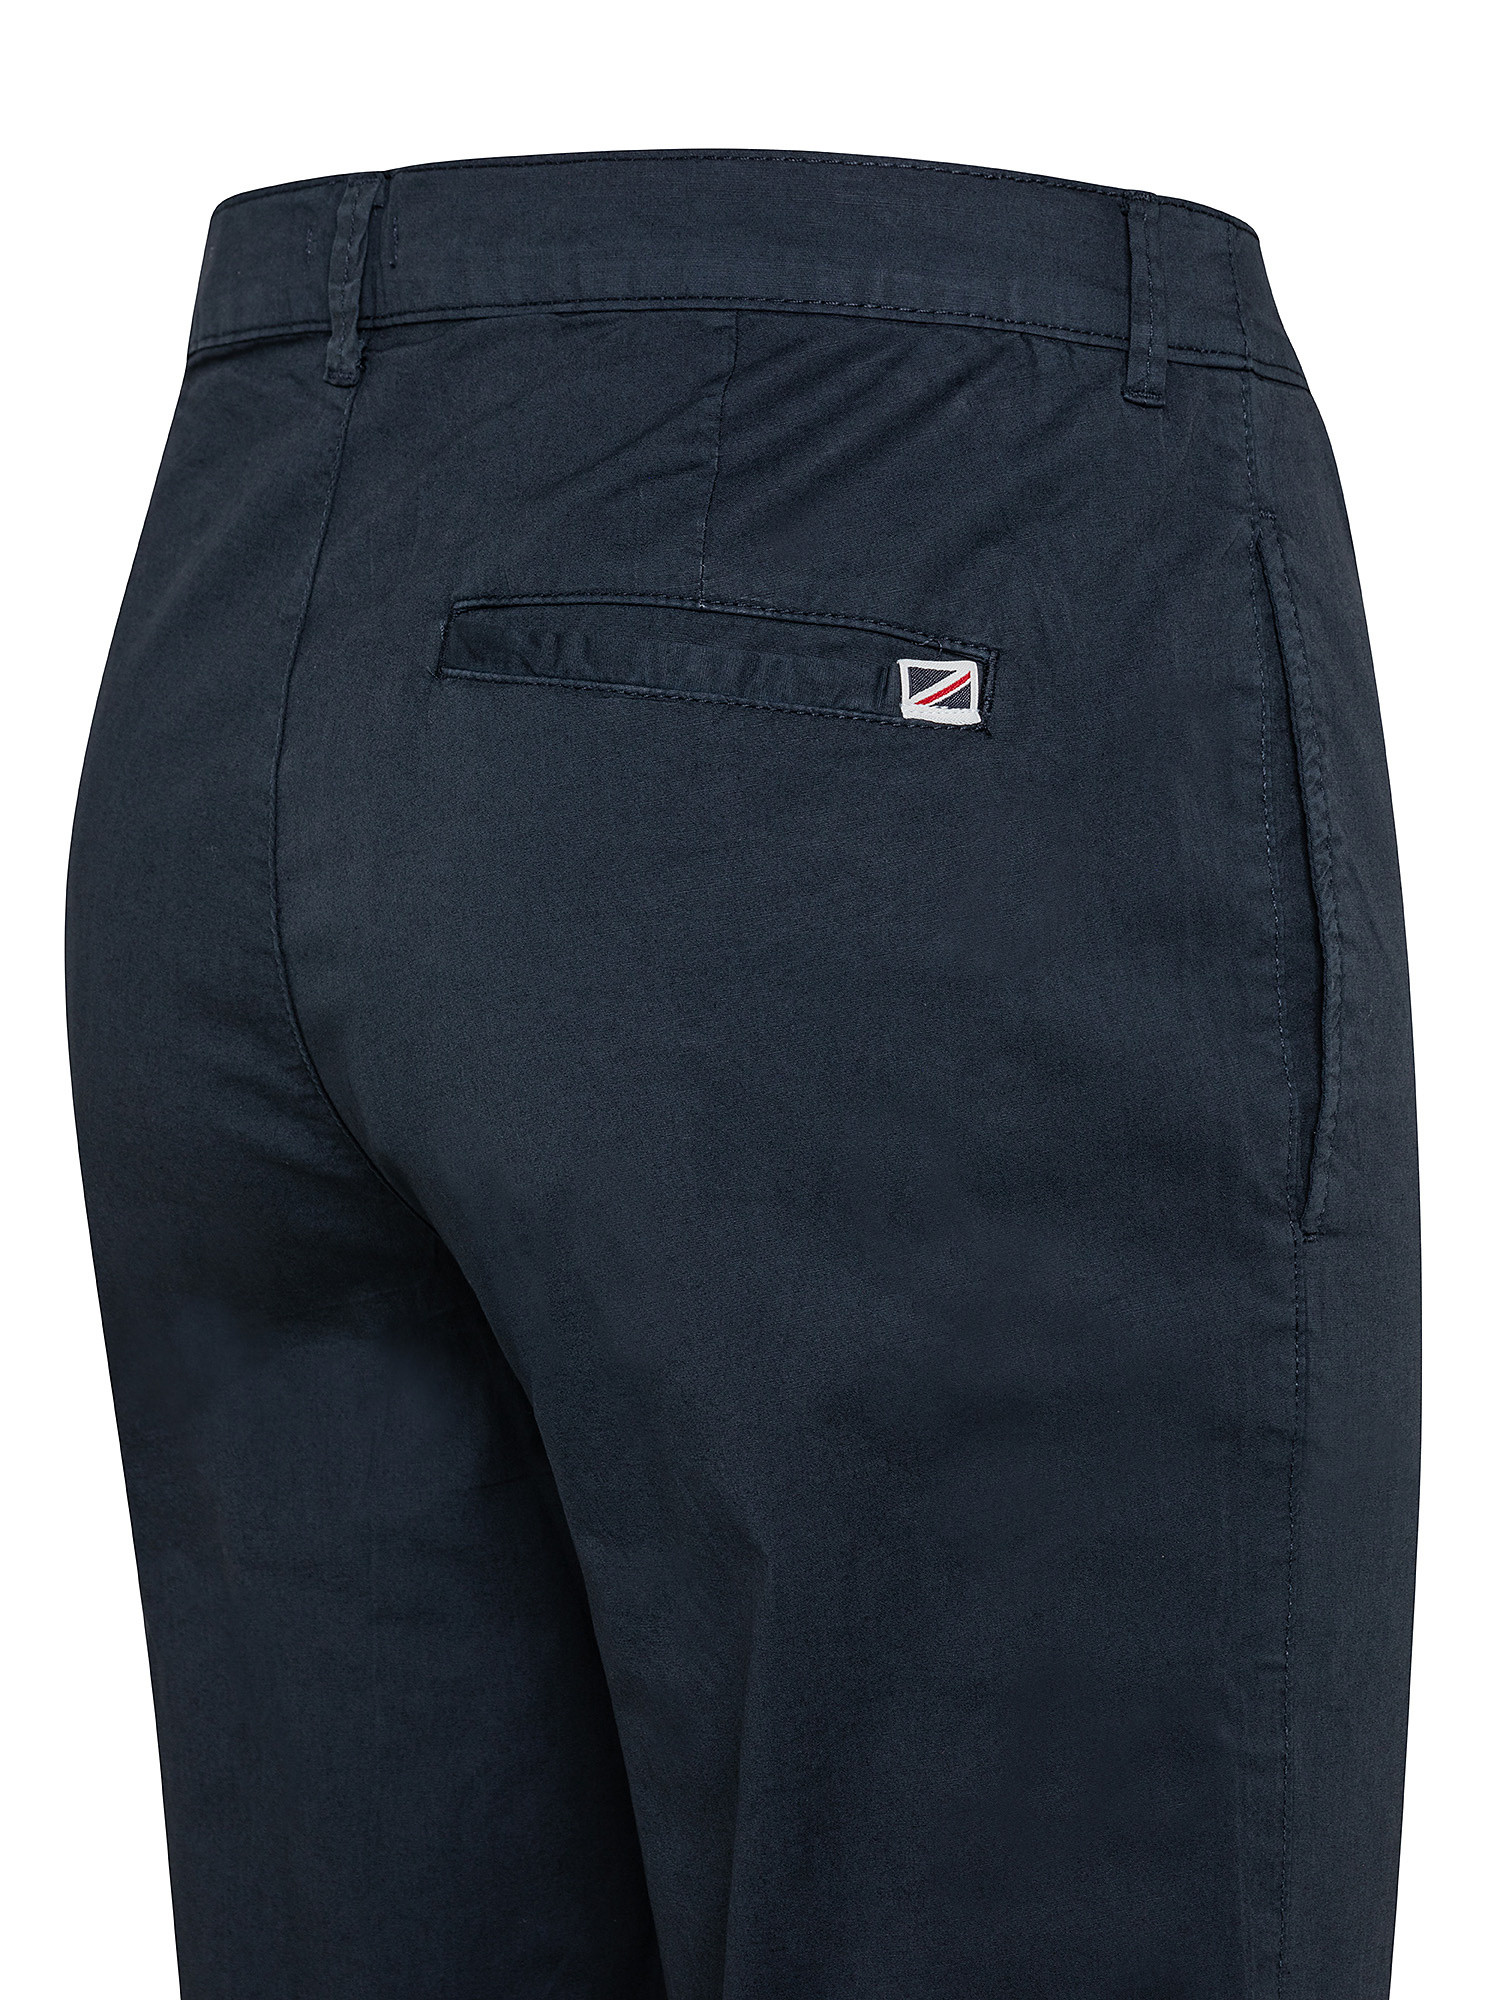 Pantaloni abito Jareth, Blu scuro, large image number 2